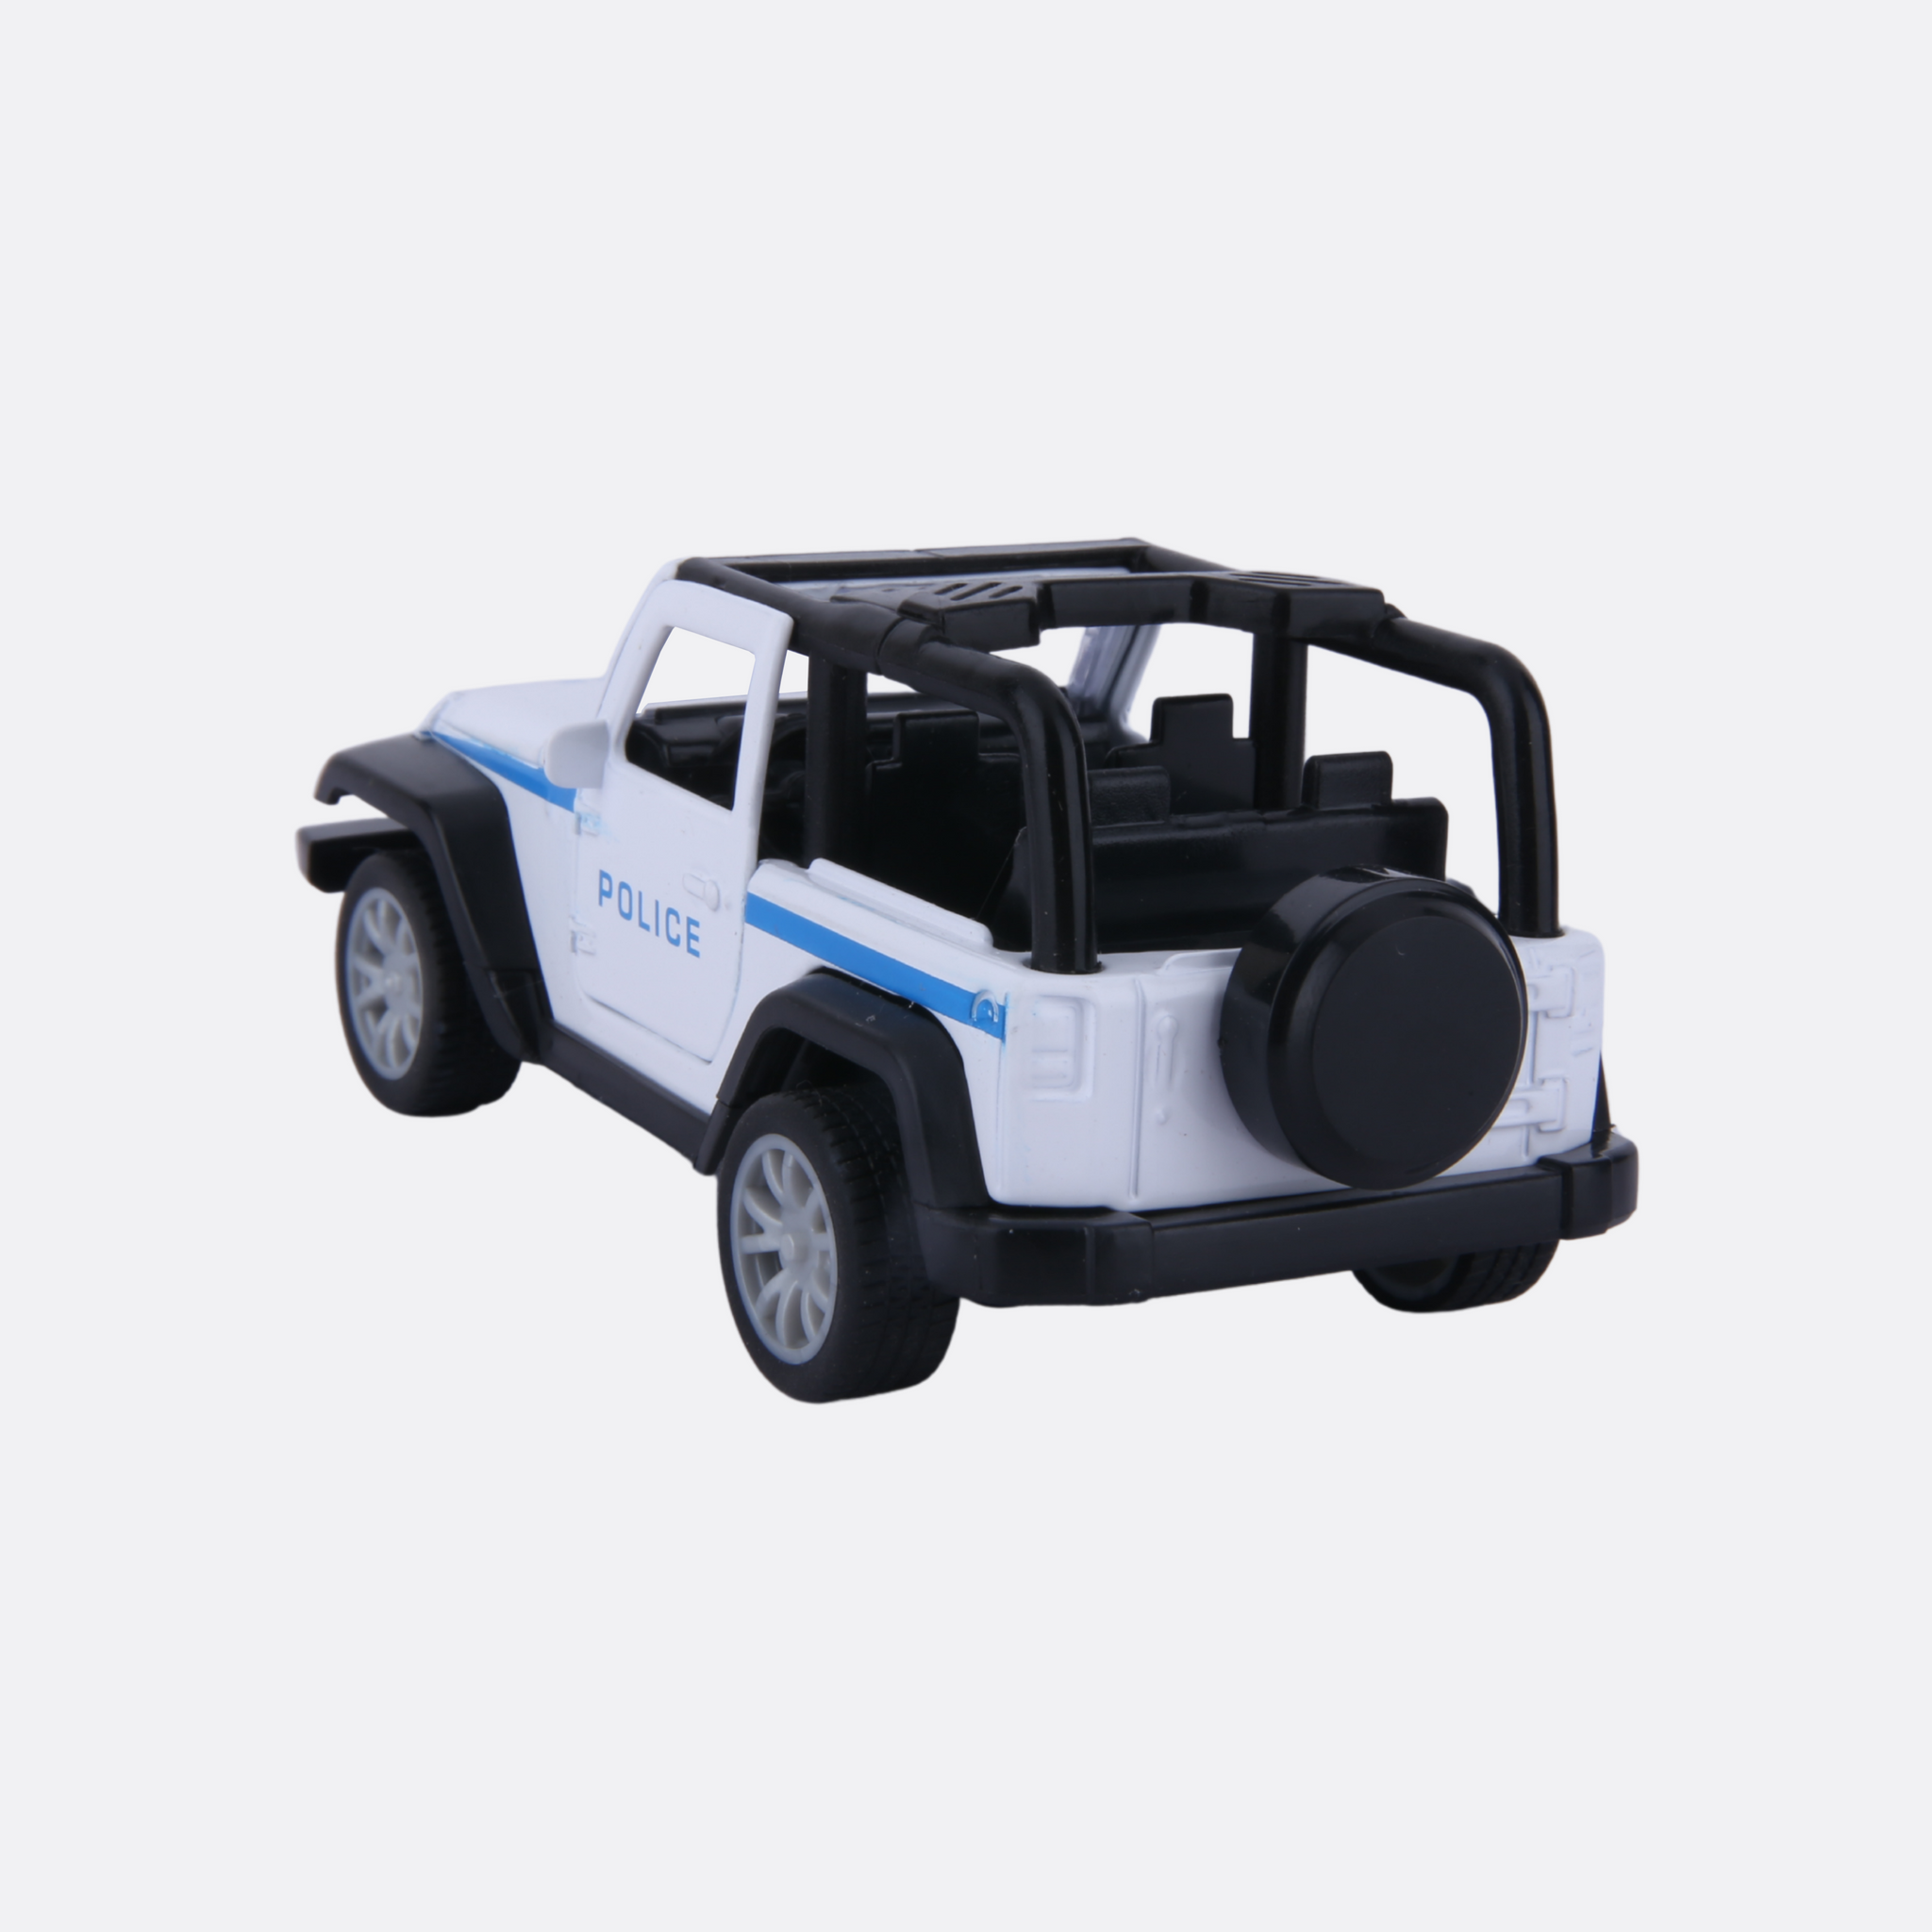 Police Jeep Imitation Car